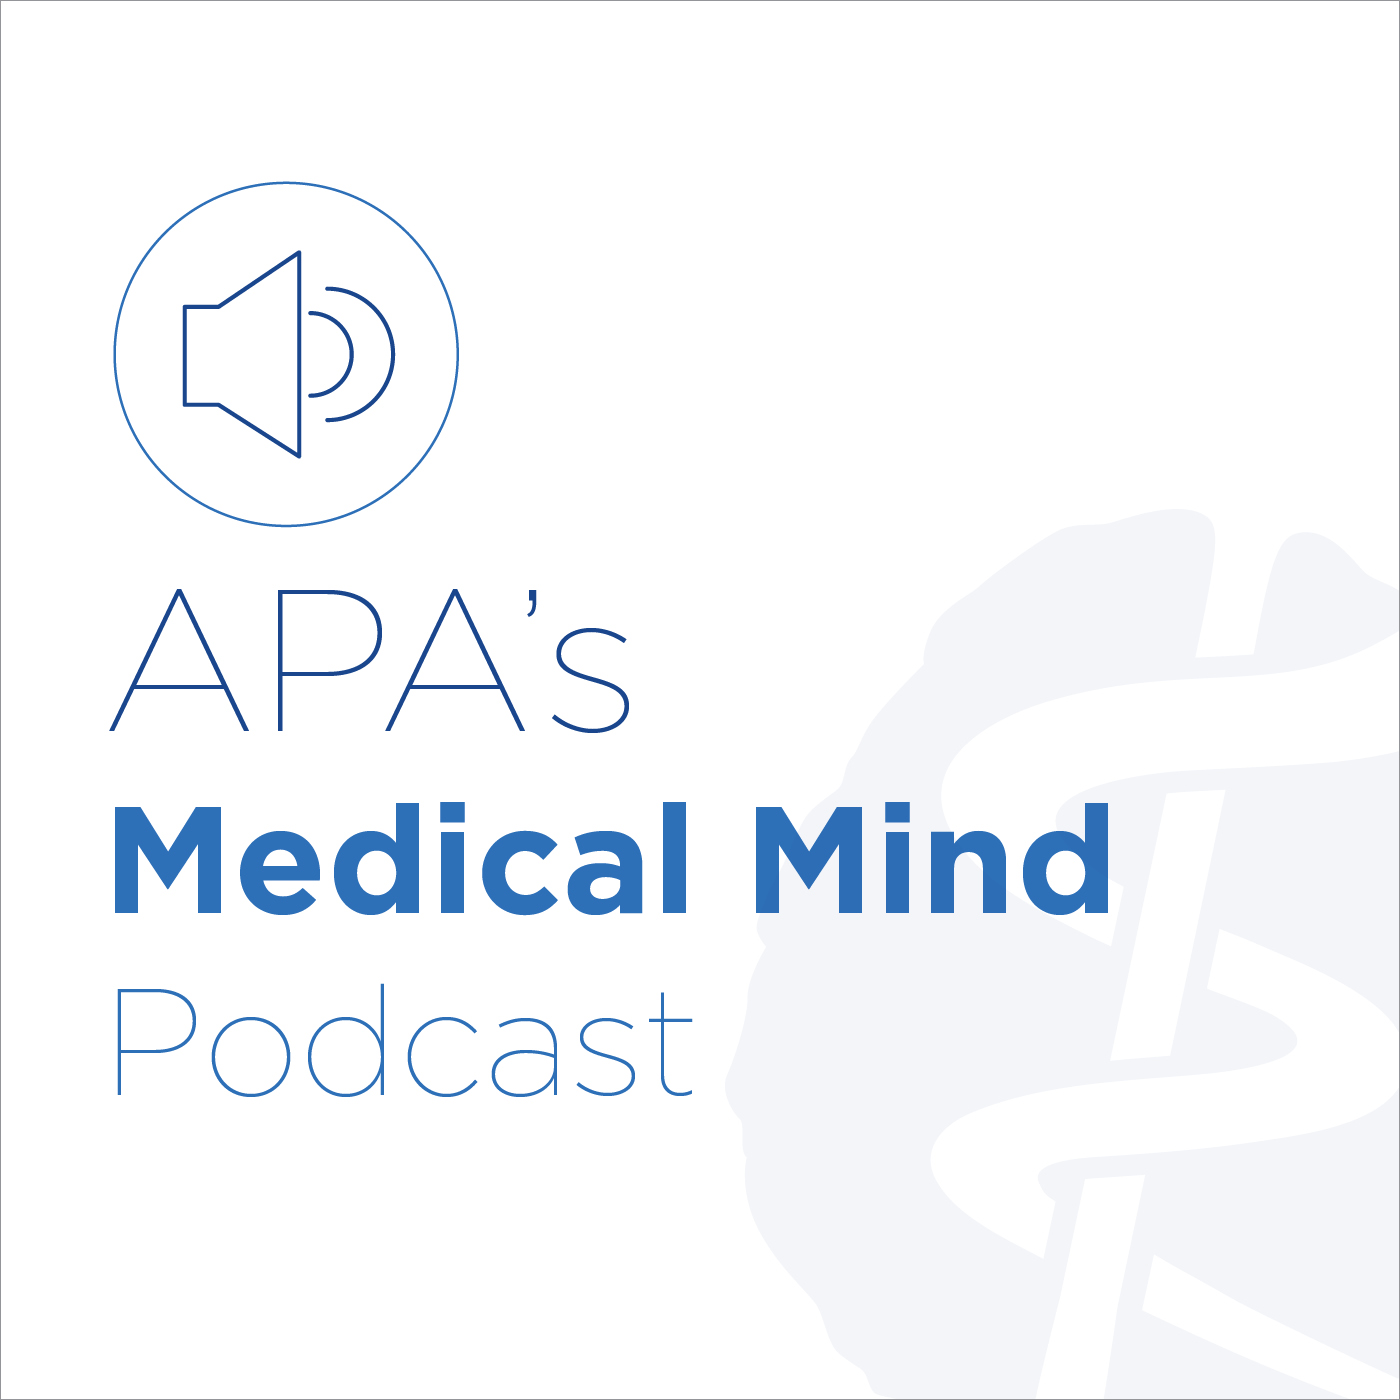 The Medical Mind Podcast